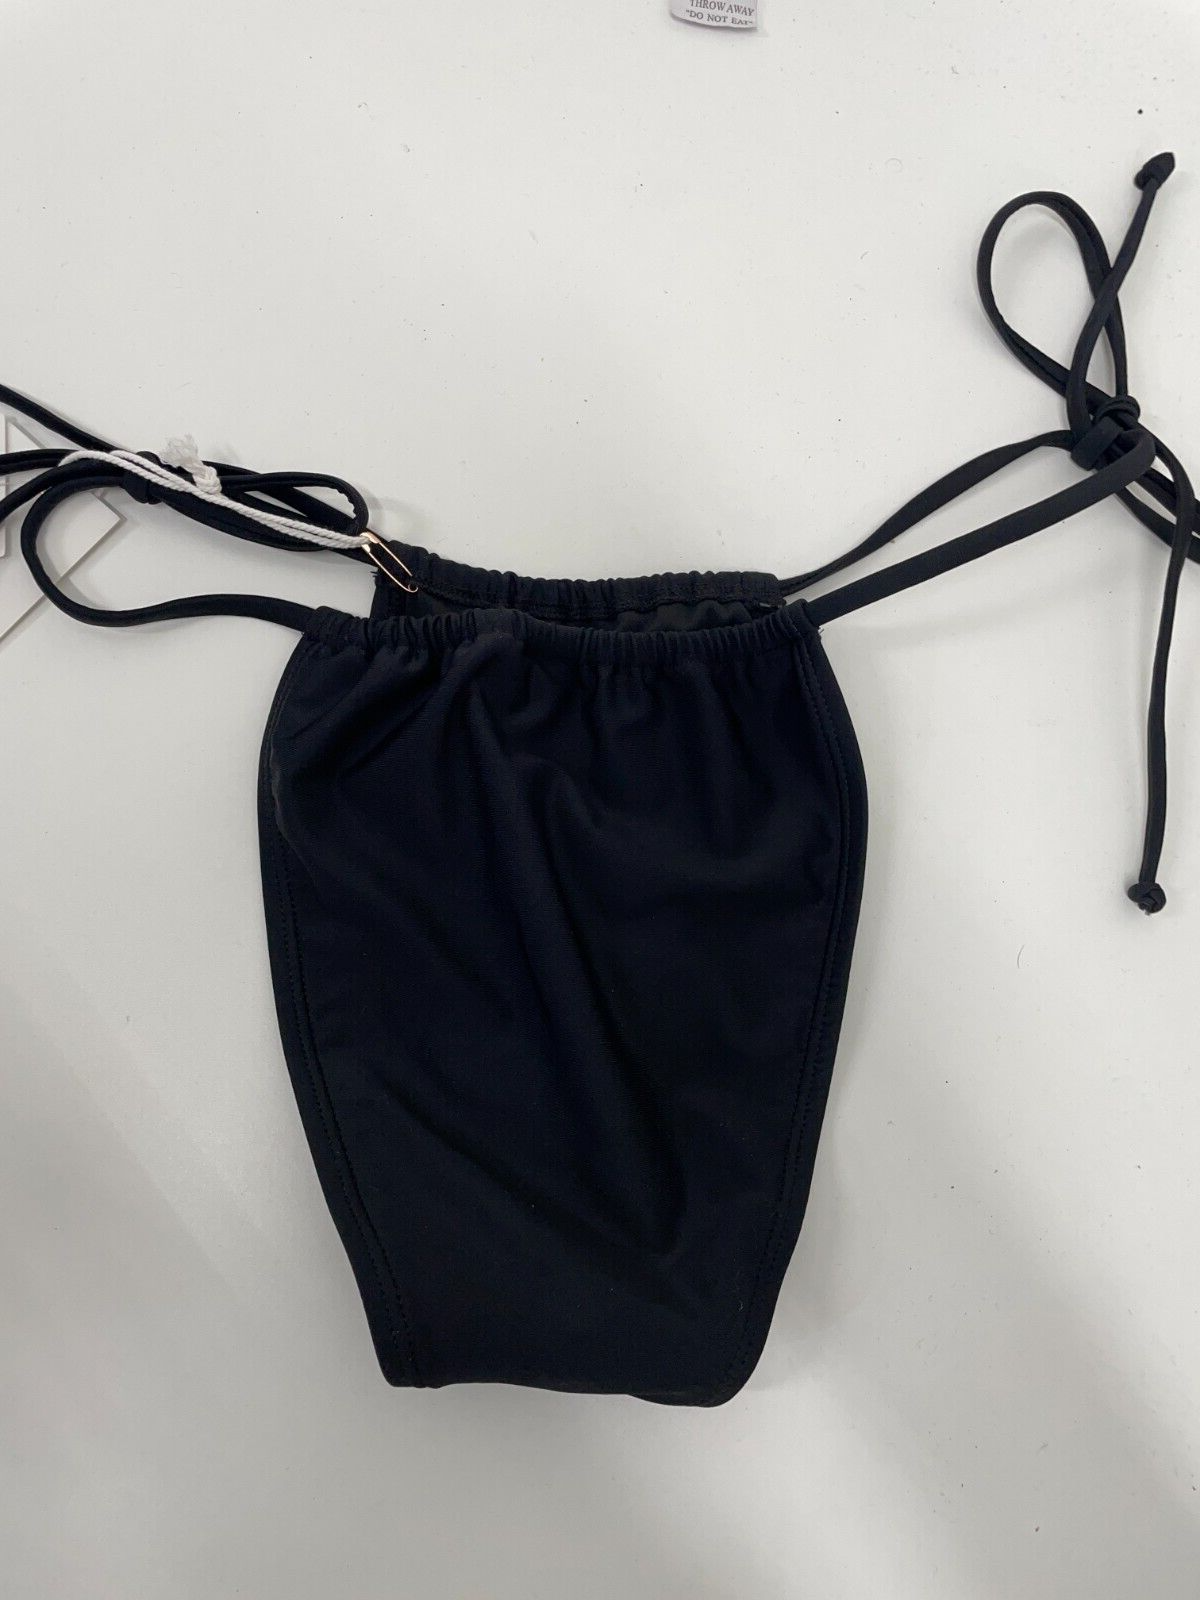 Good American Women's 0 / XS Tiny Ties Bikini Bottom Black GSW0765 Side Ties NWT